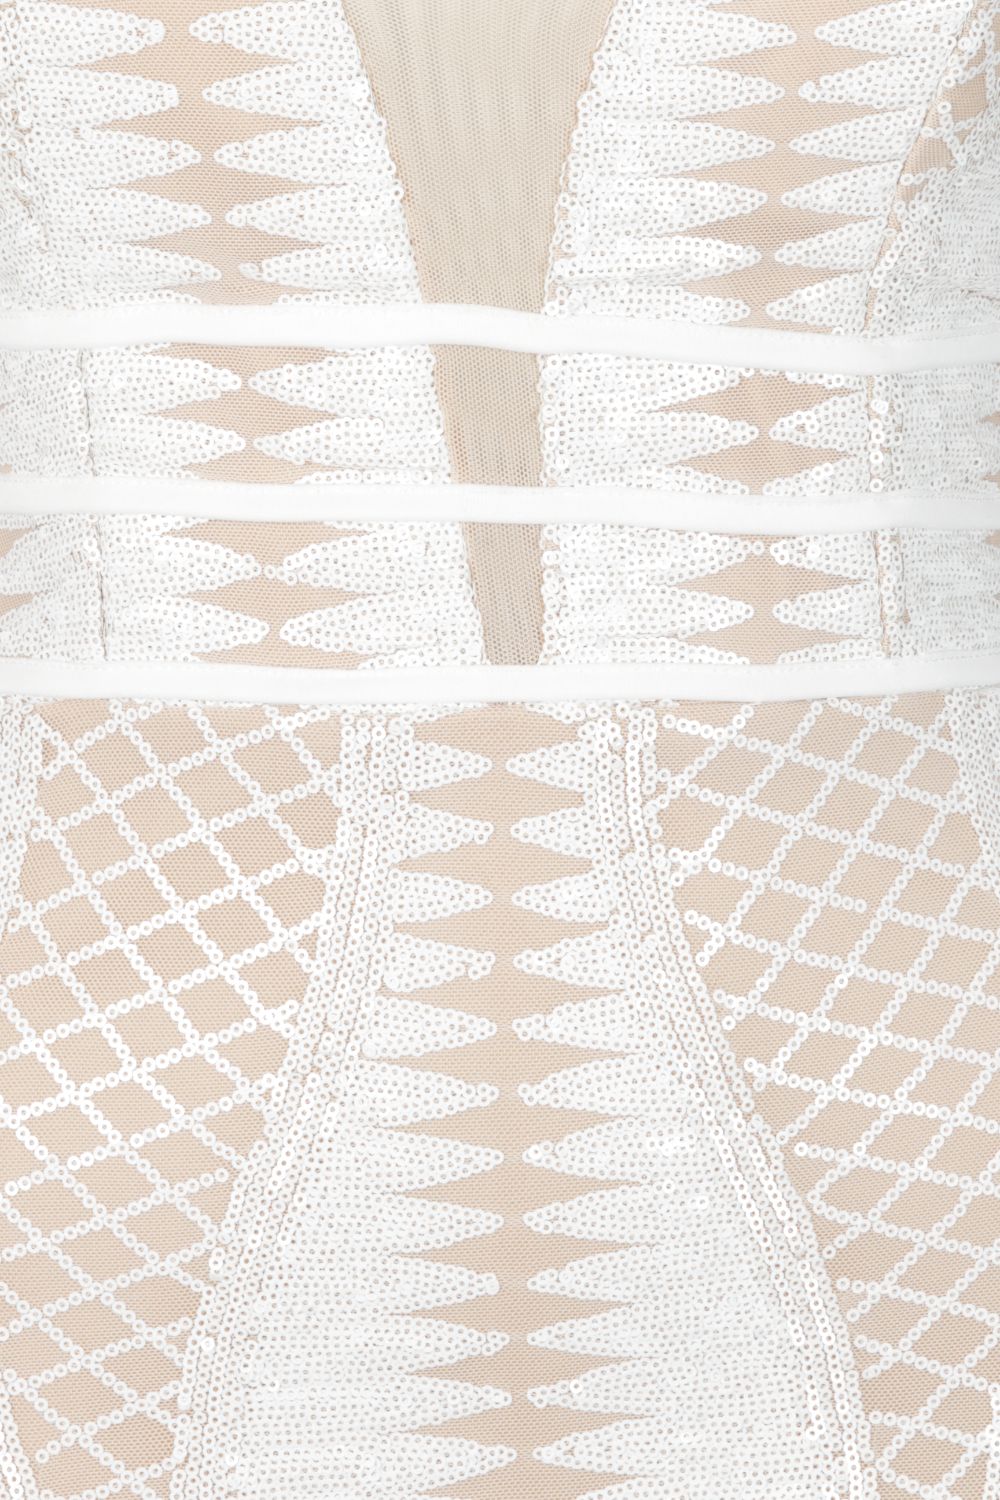 Limelight White Nude Plunge Cage Sequin Bandage Illusion Mini Dress